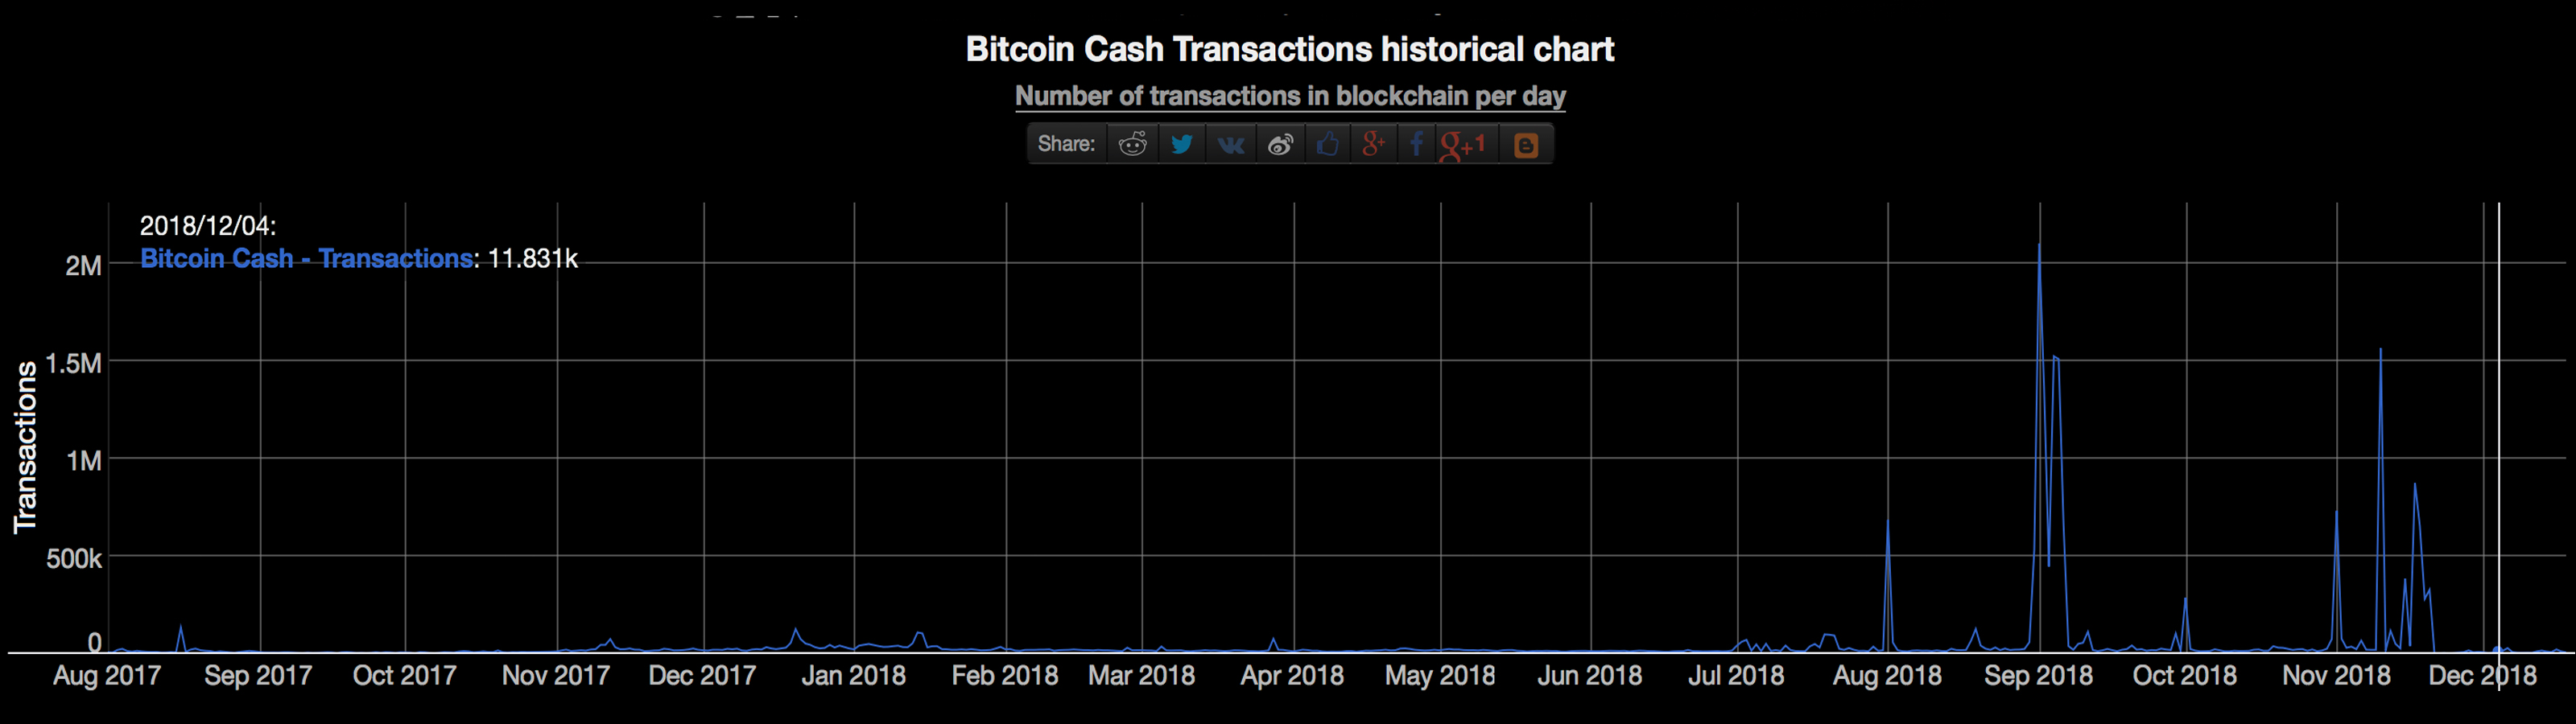 Количество транзакций Bitcoin Cash